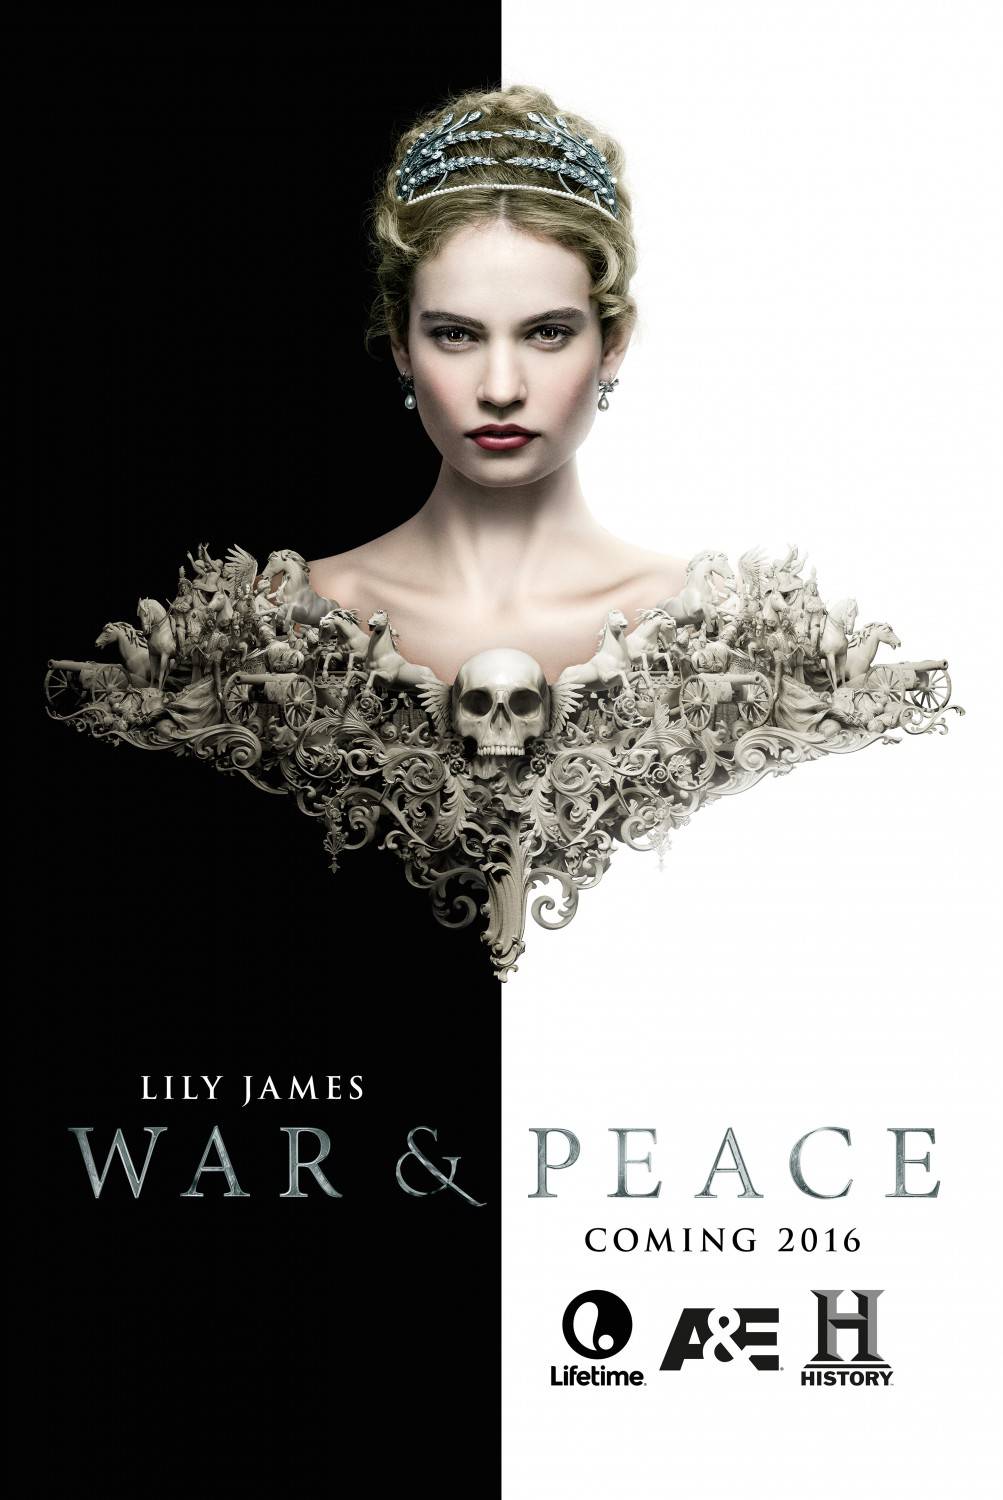 Война и мир / War and Peace